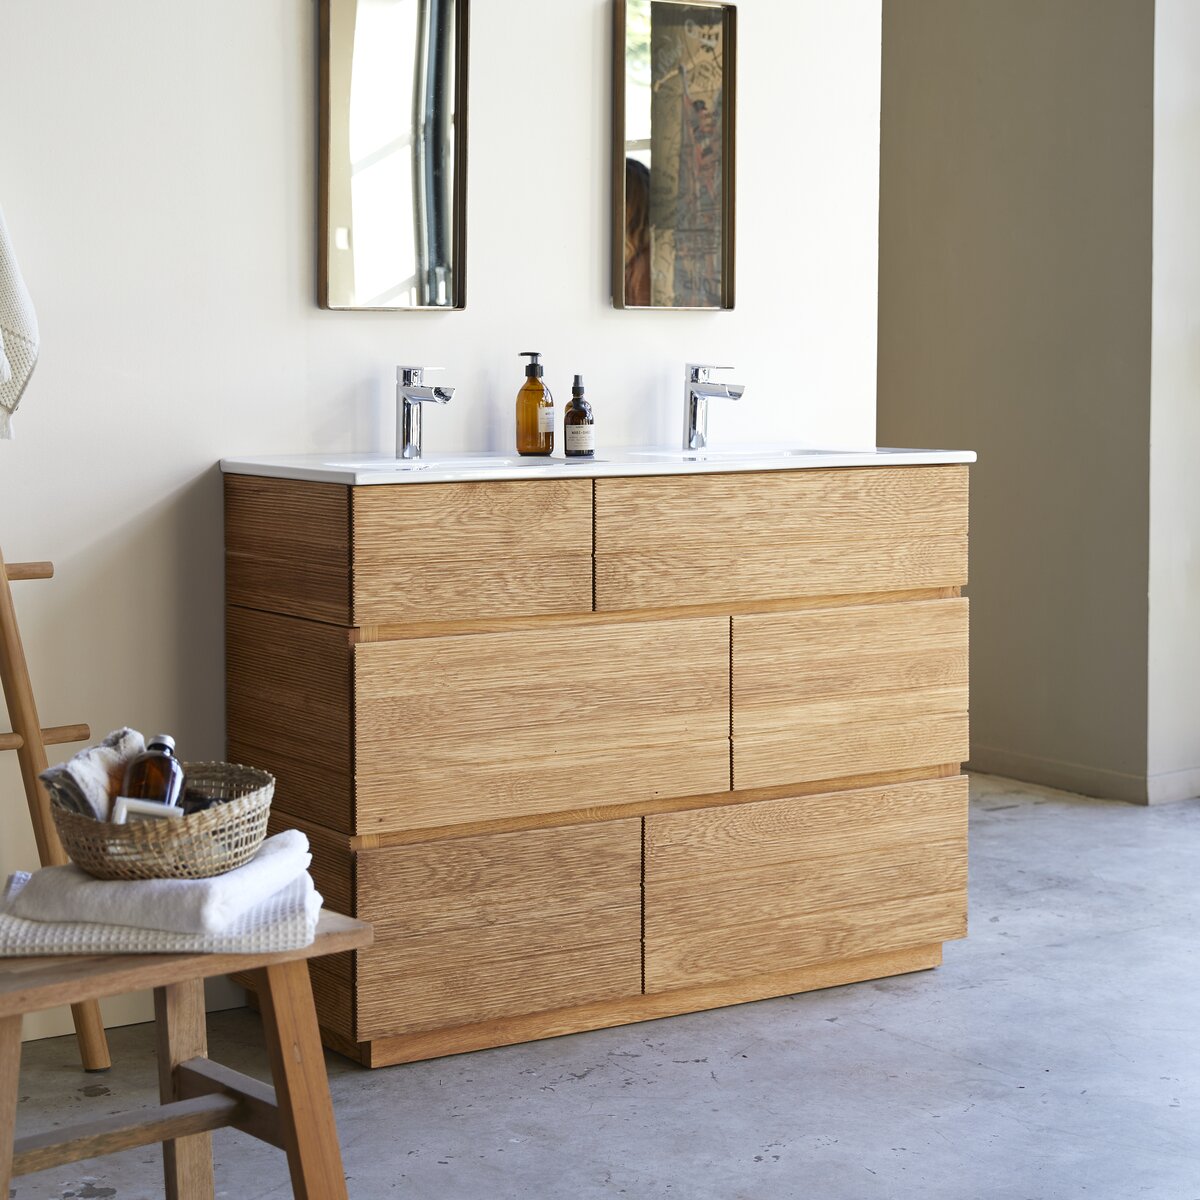 Solid oak and ceramic bathroom cabinet 120 cm - Bathroom / Bathroom ...